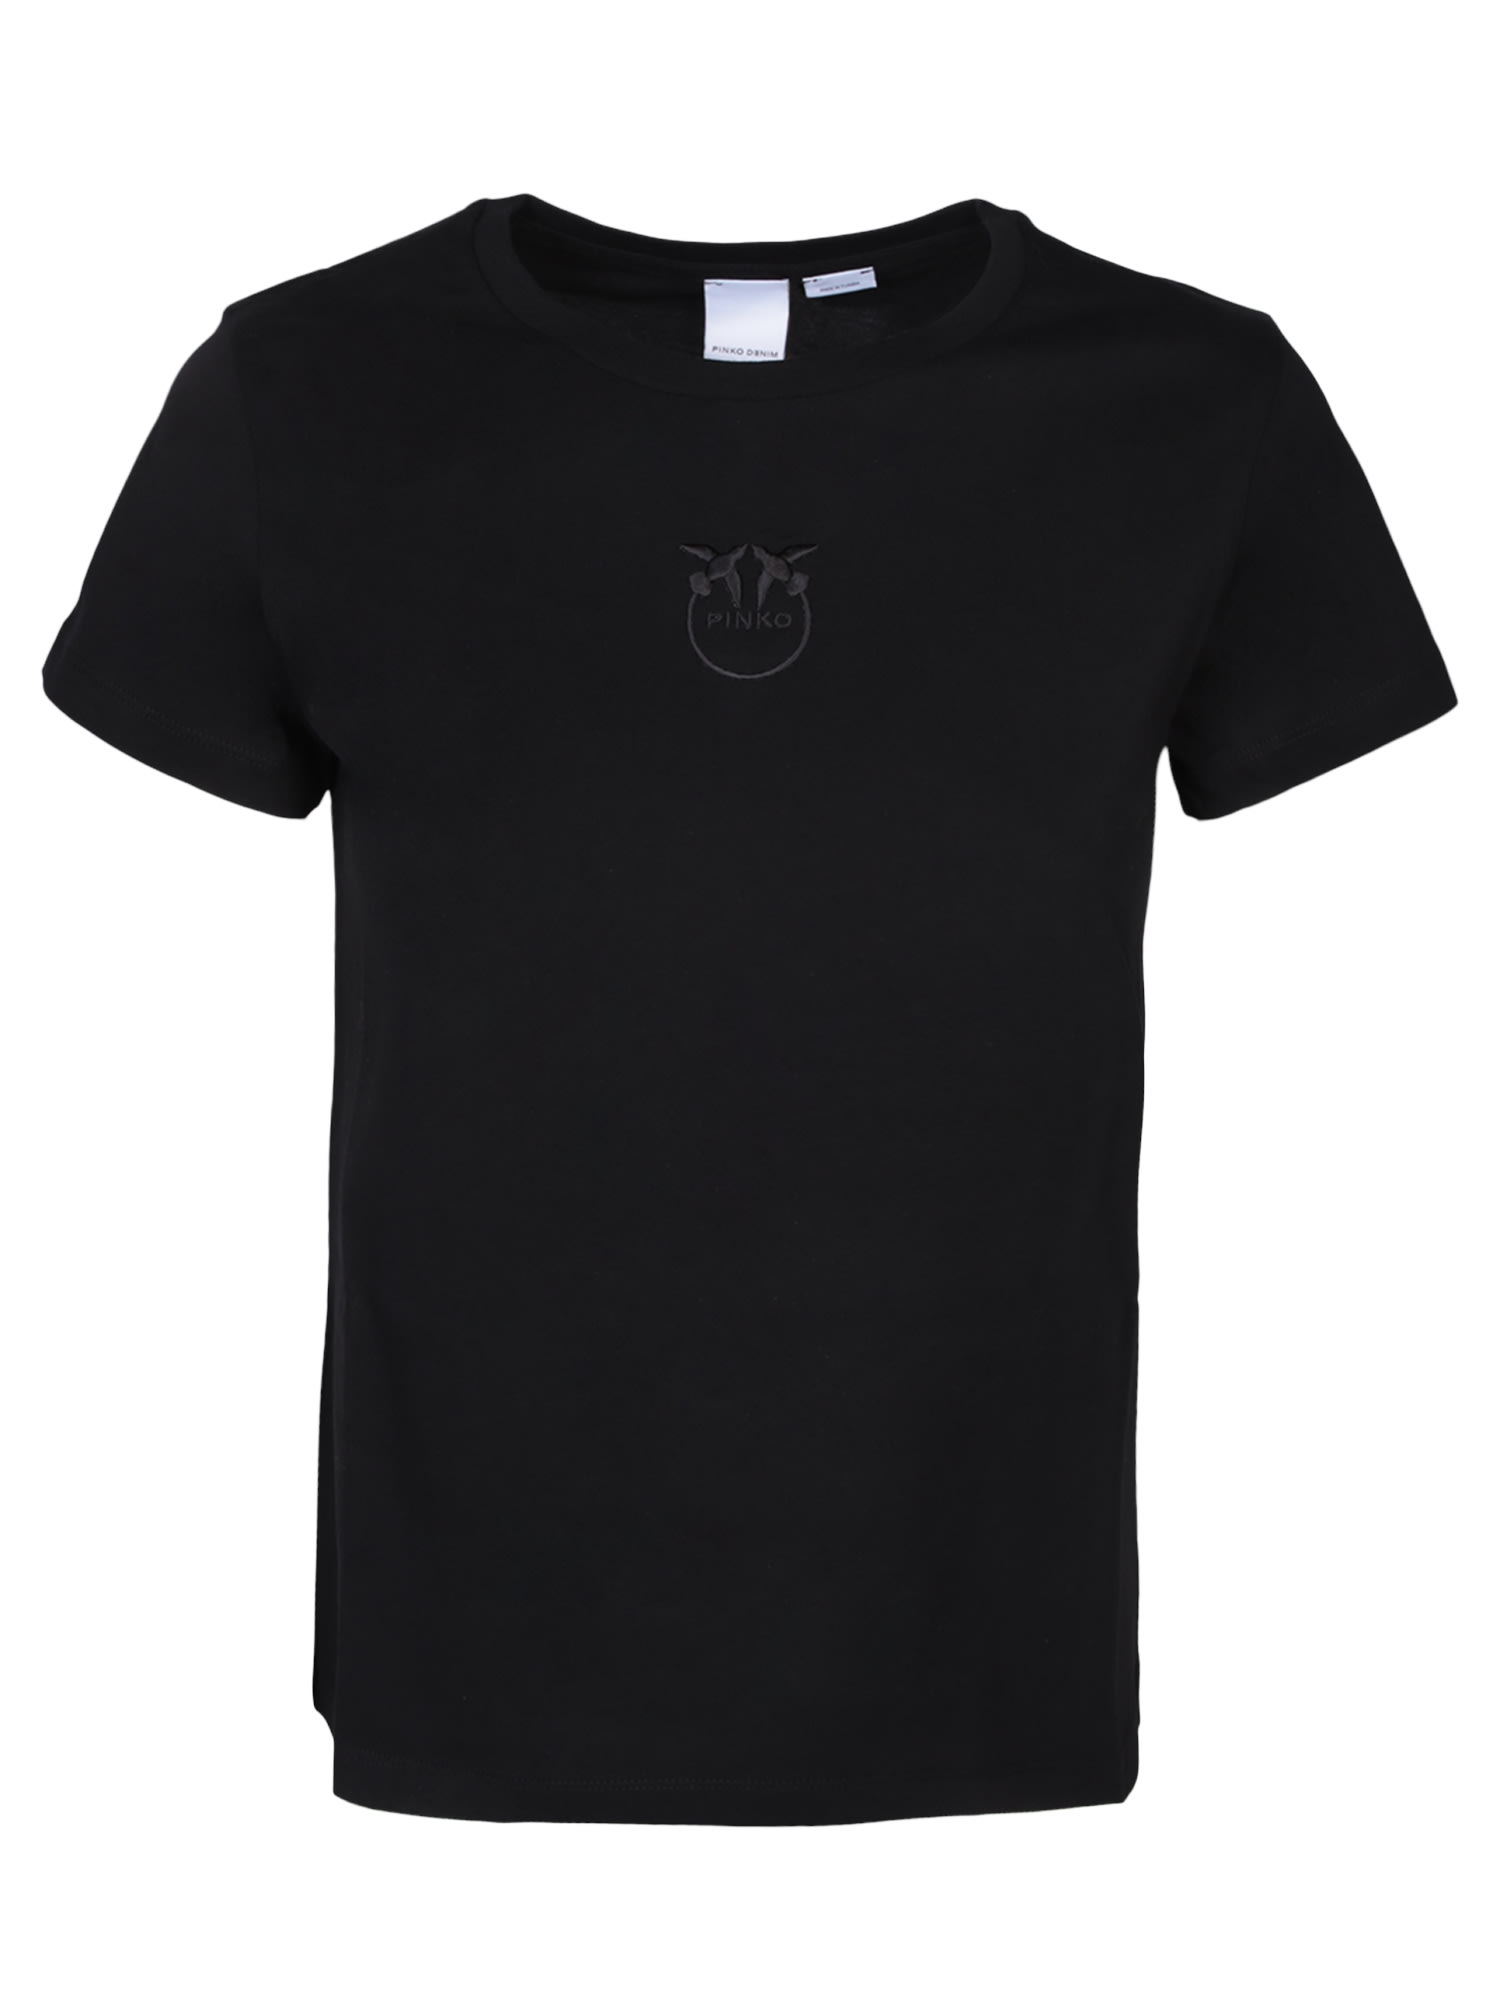 Shop Pinko Bussolotto Black T-shirt